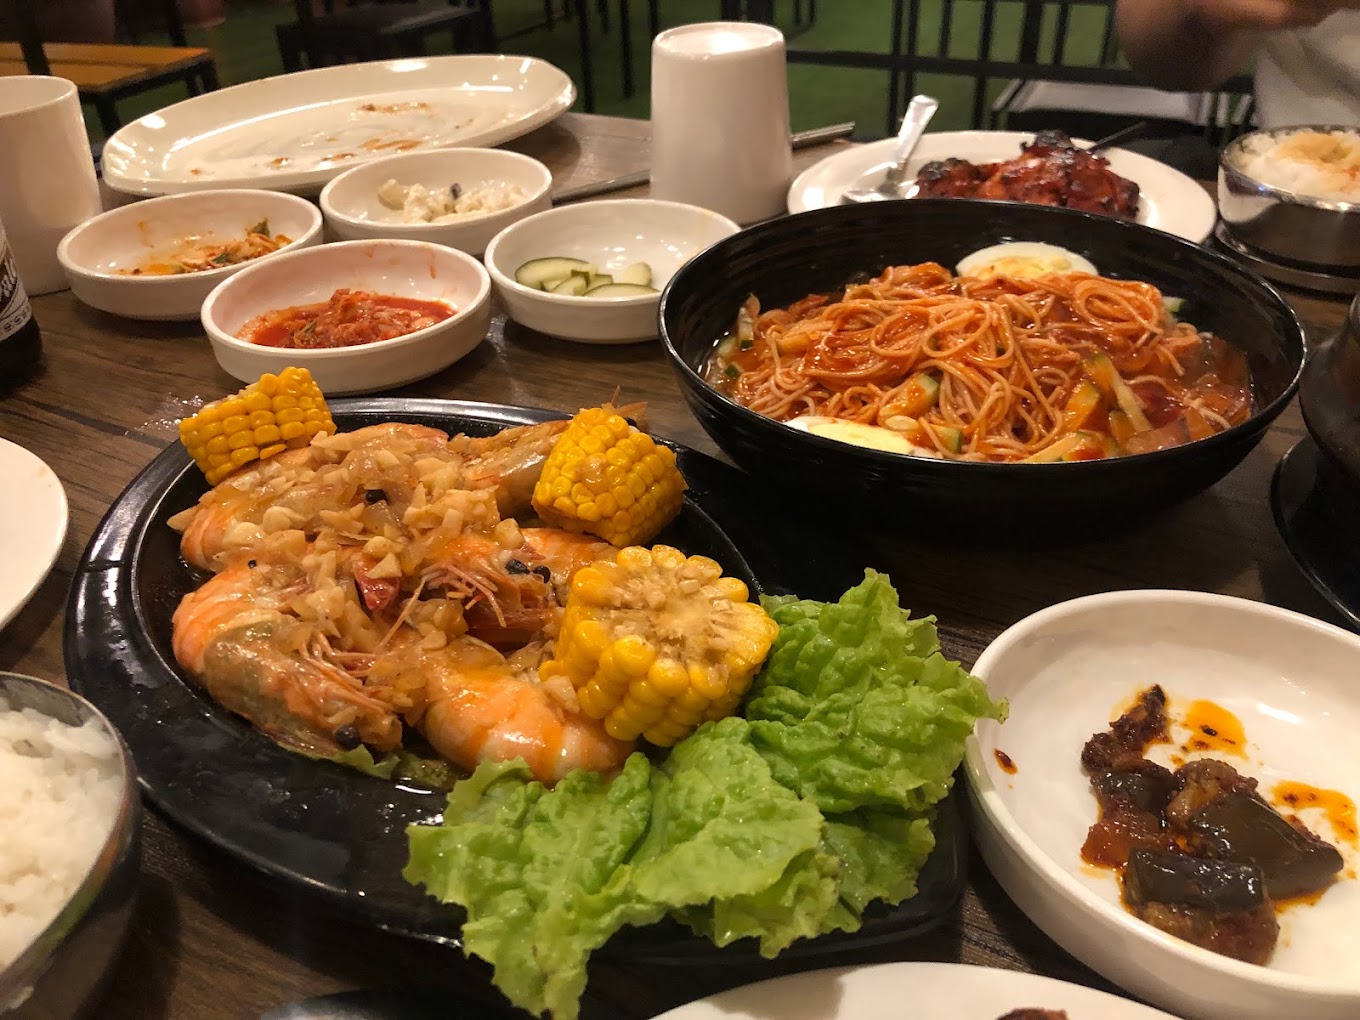 MK (My Korea) Grill & Restaurant